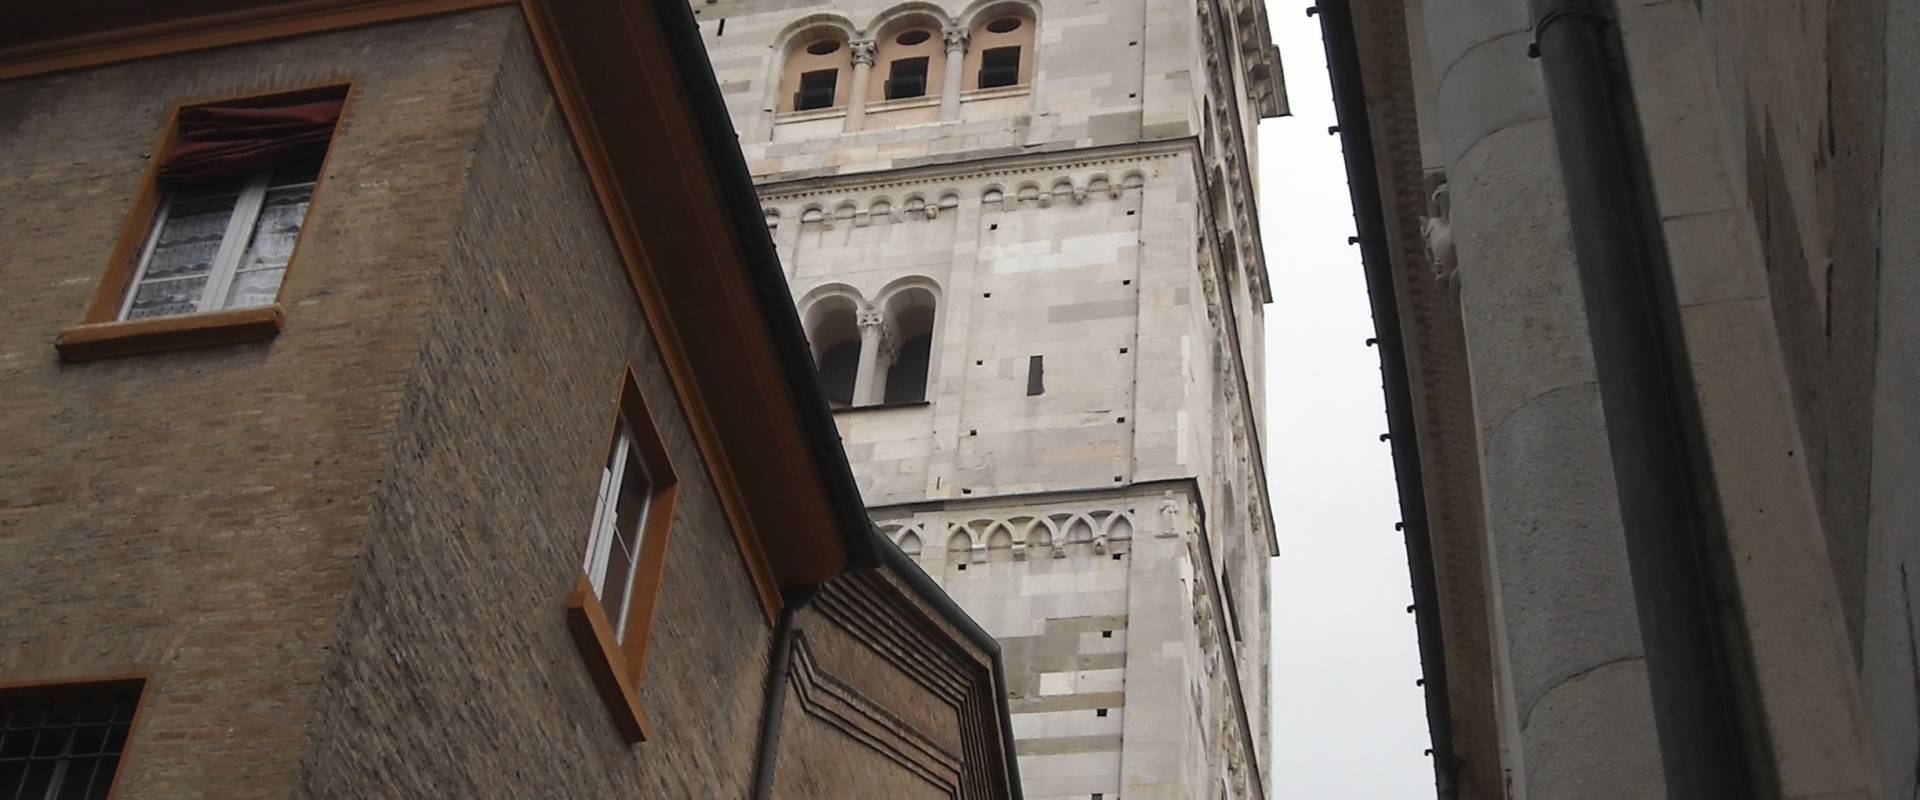 Duomo di Modena, veduta della torre campanaria da una via adiacente foto di Giuch86